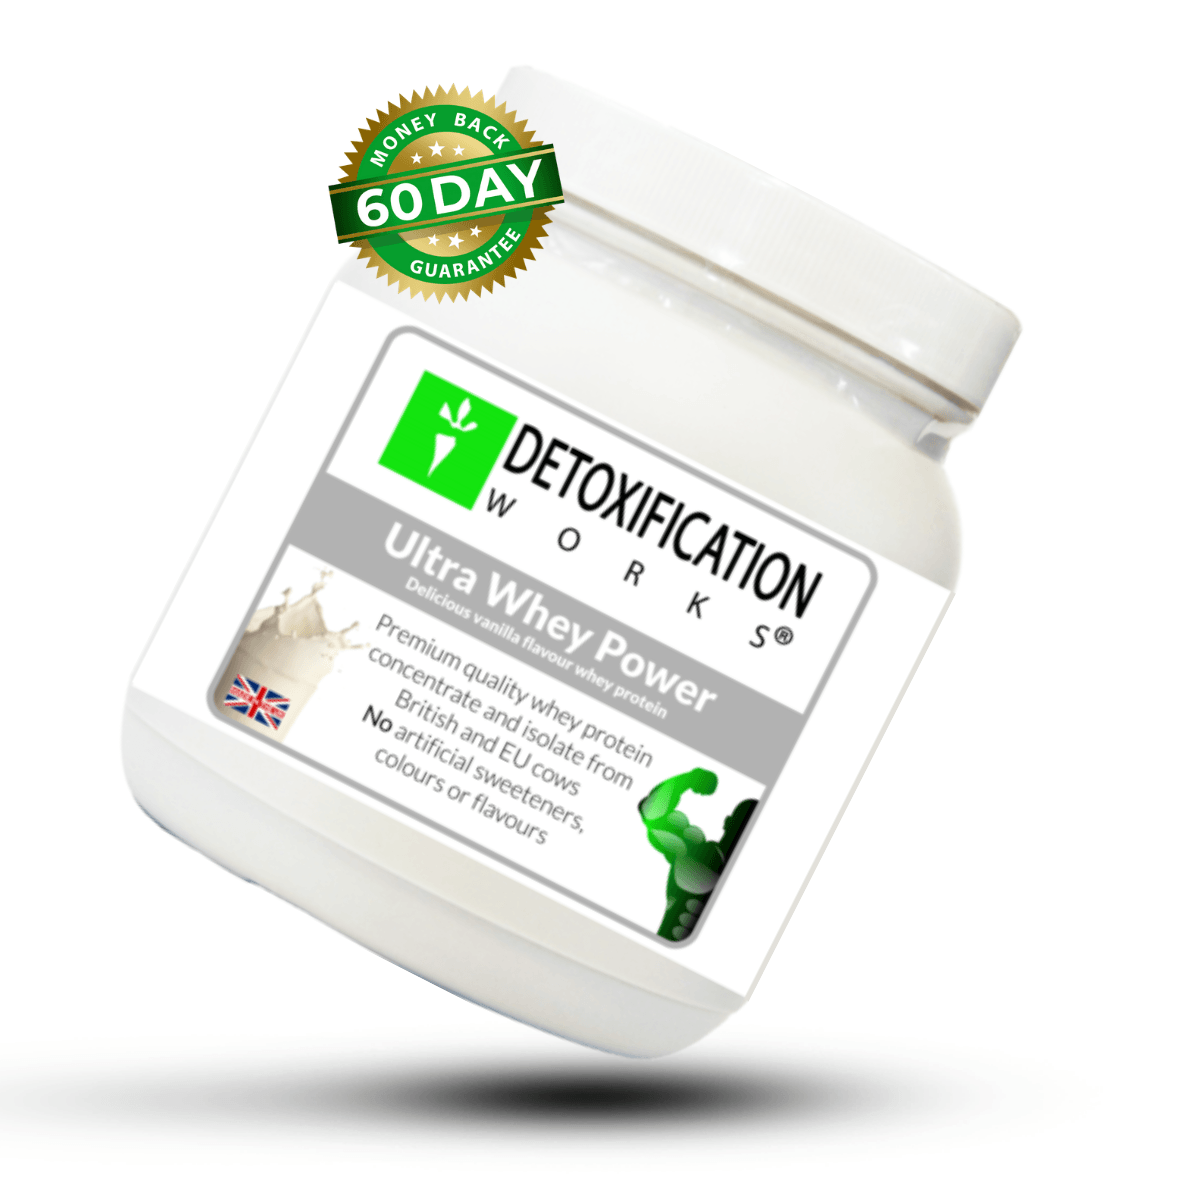 Ultra Whey Power (Natural Vanilla Flavor) - Detox Works ®